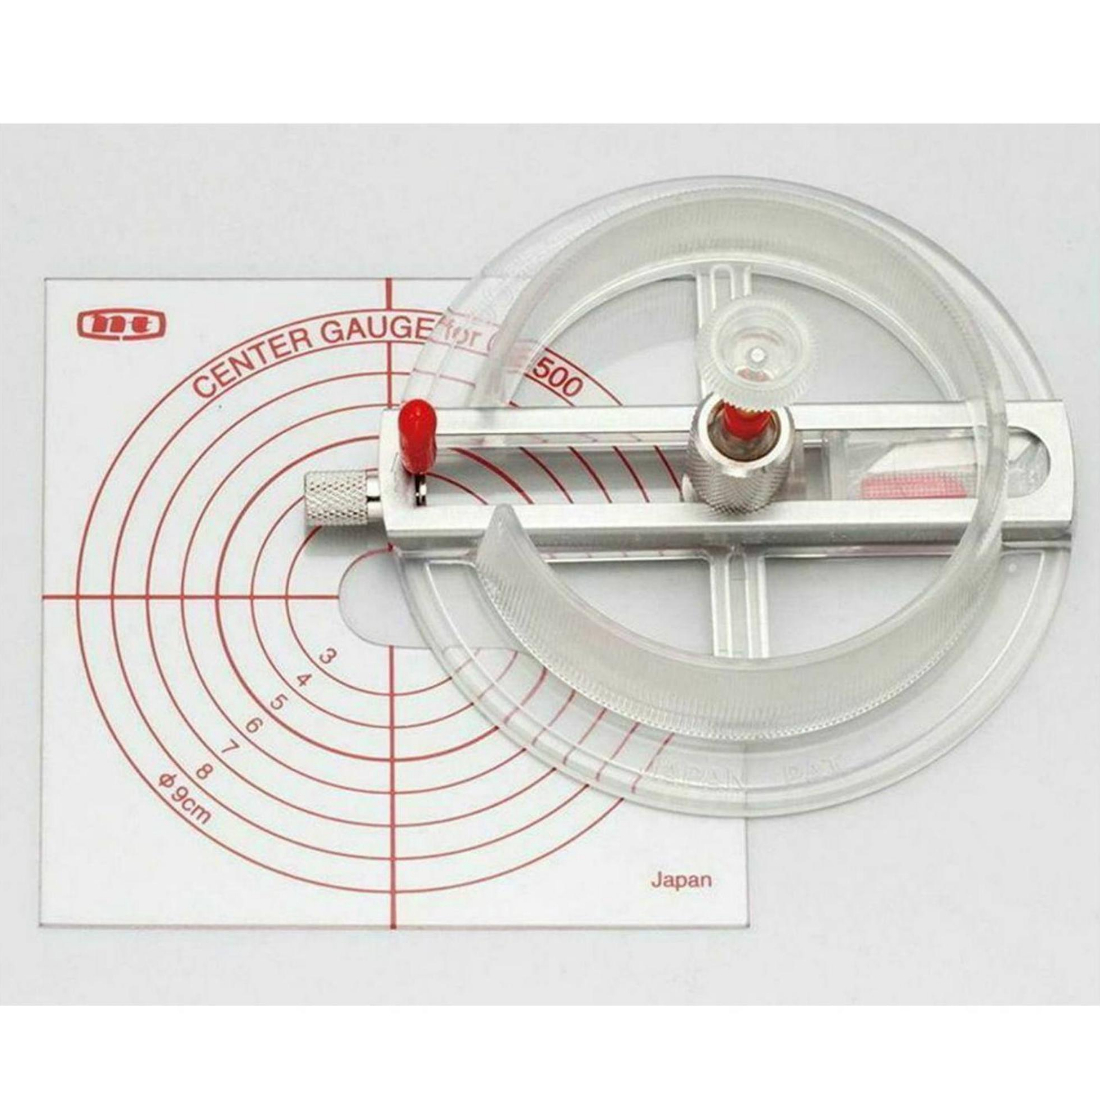 Cortador Circular IC1500P nt cutter